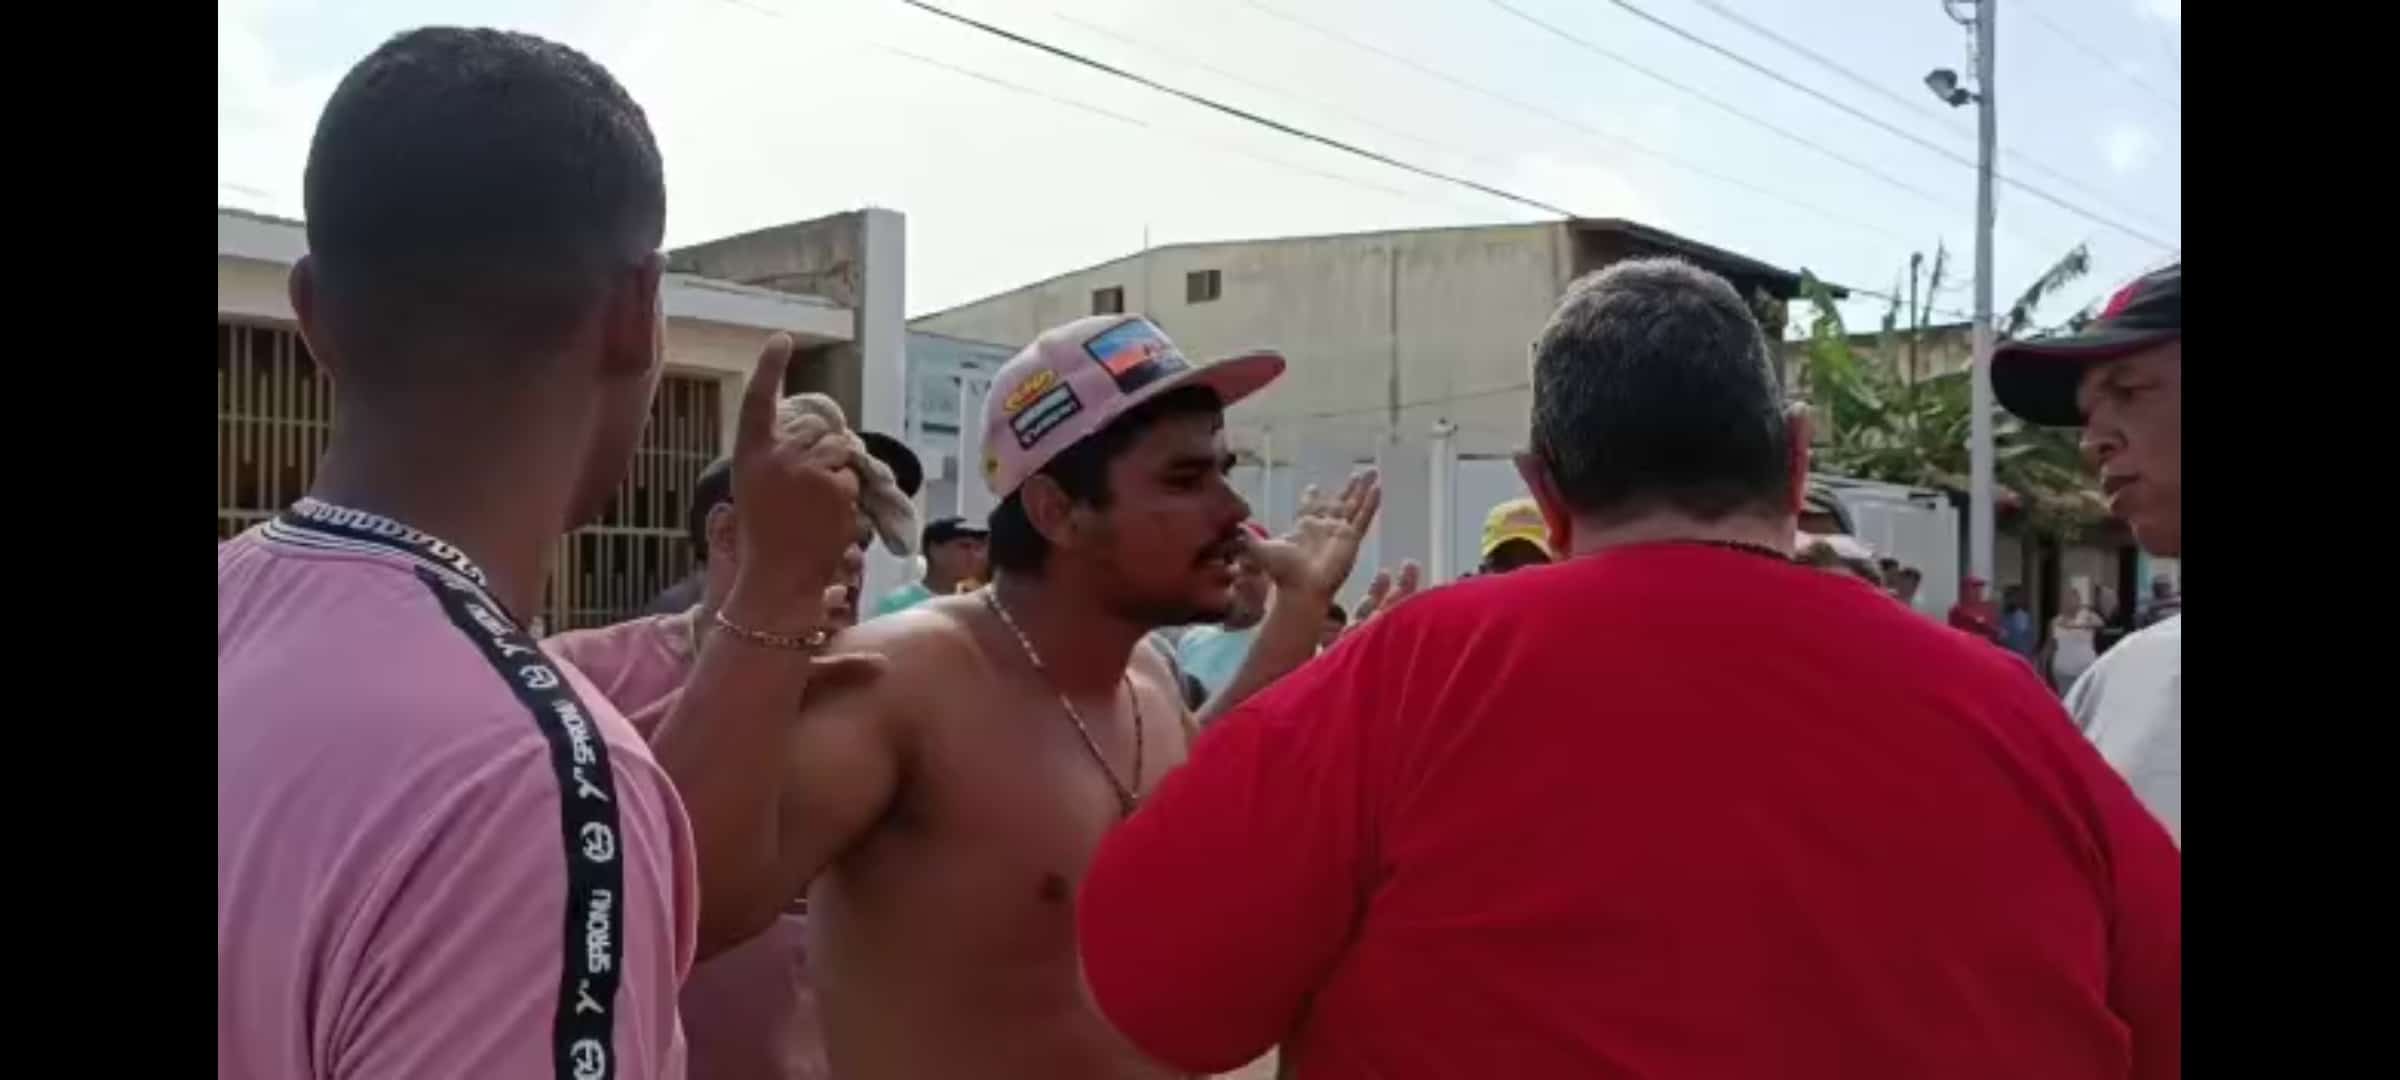 Periodista fue agredido por presunto revendedor de gasolina en Falcón